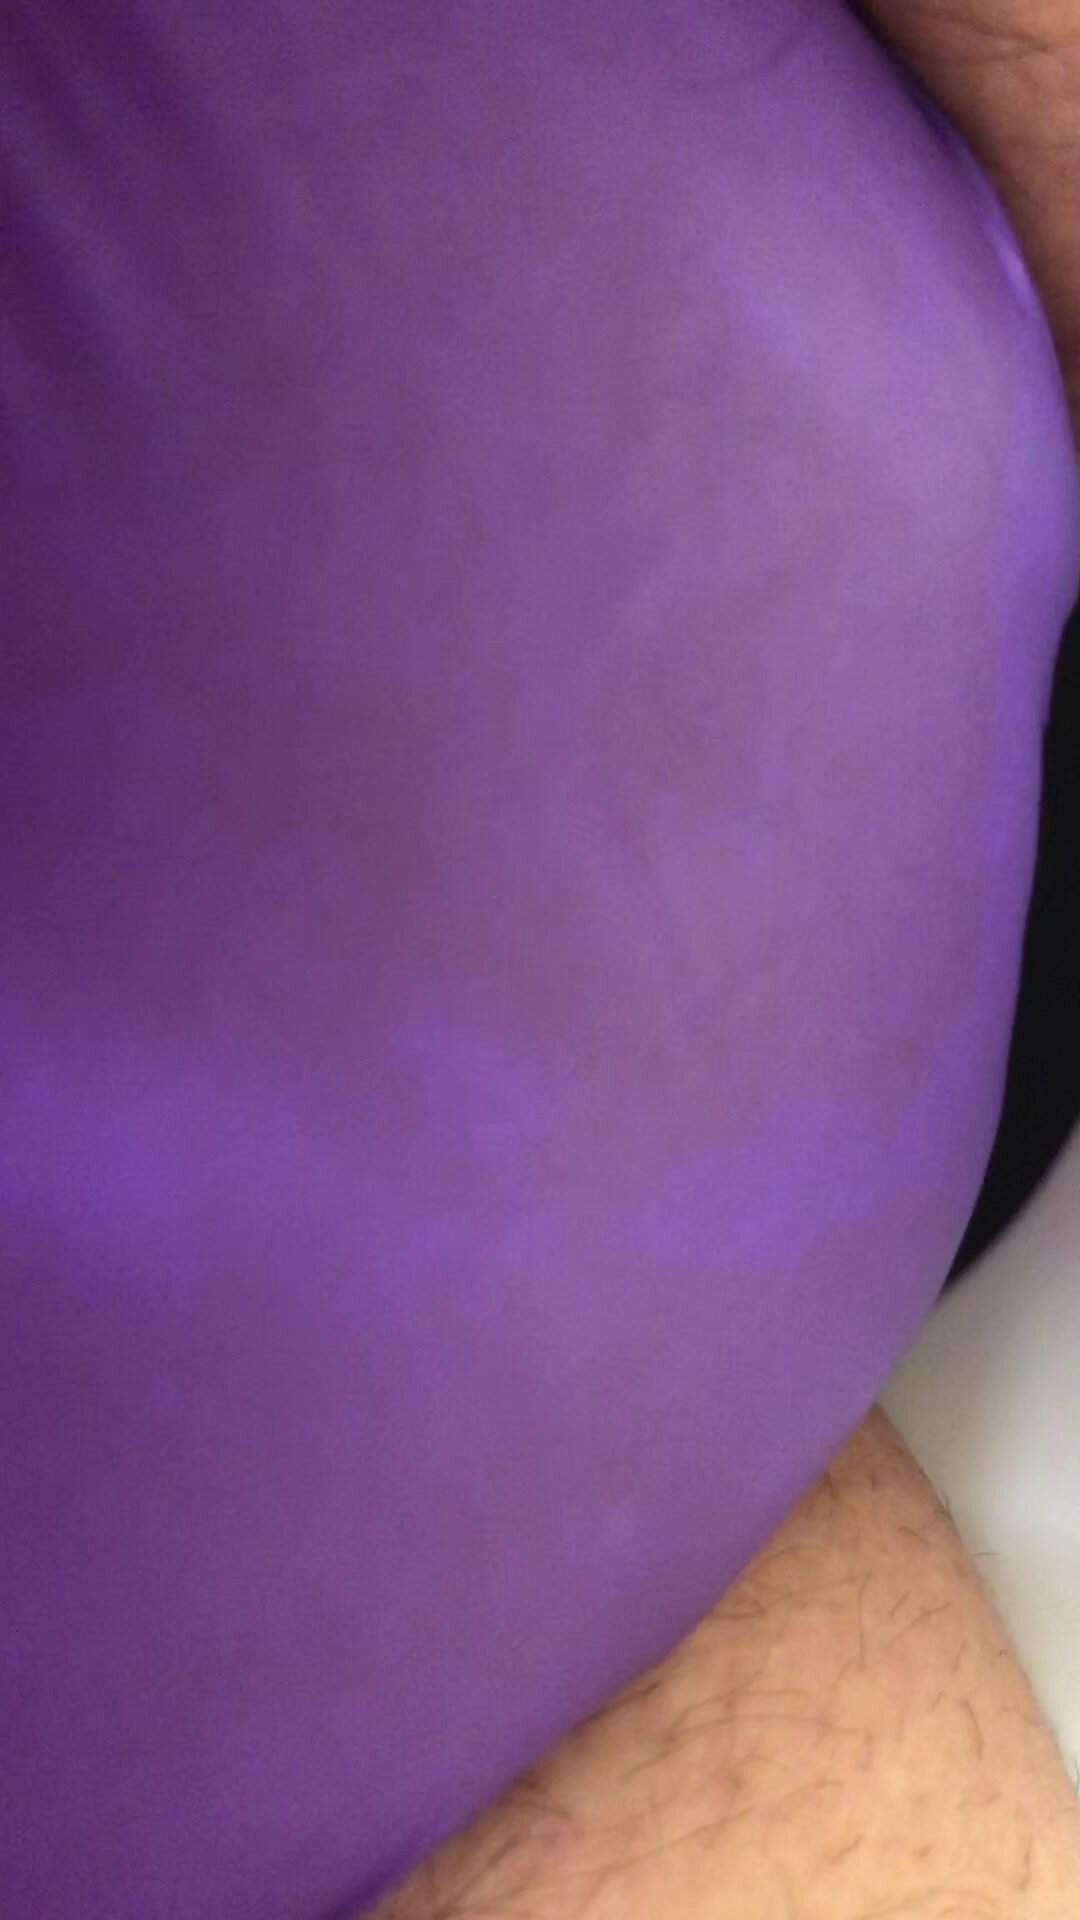 Flooded purple Diaper